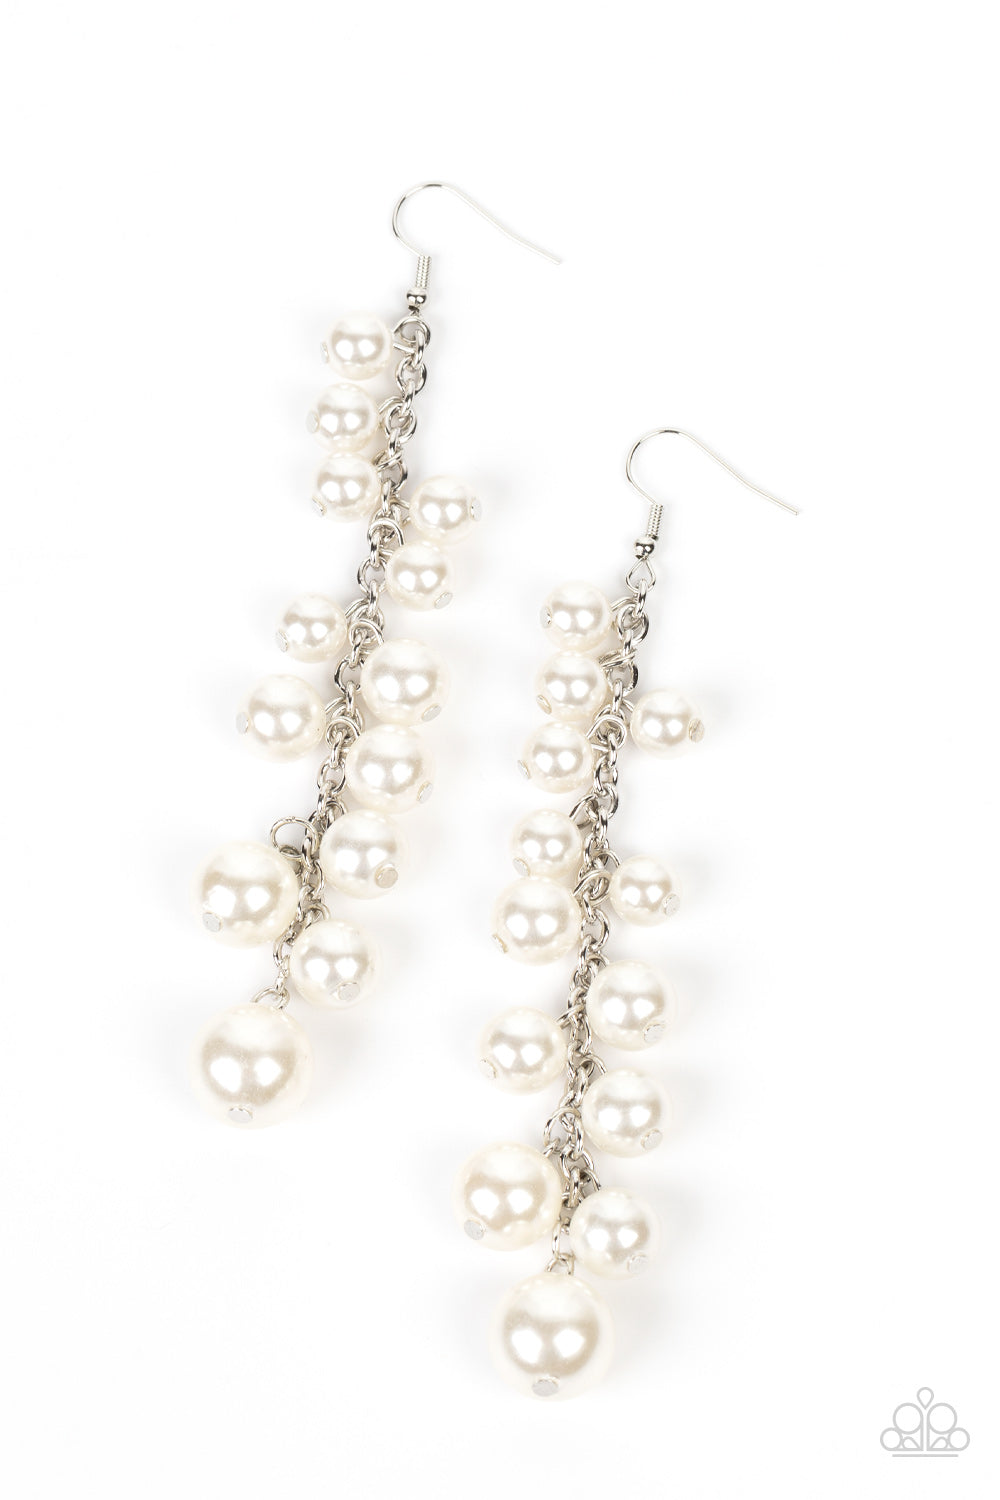 Paparazzi Accessories - Atlantic Affair #E213 Peg - White Earrings